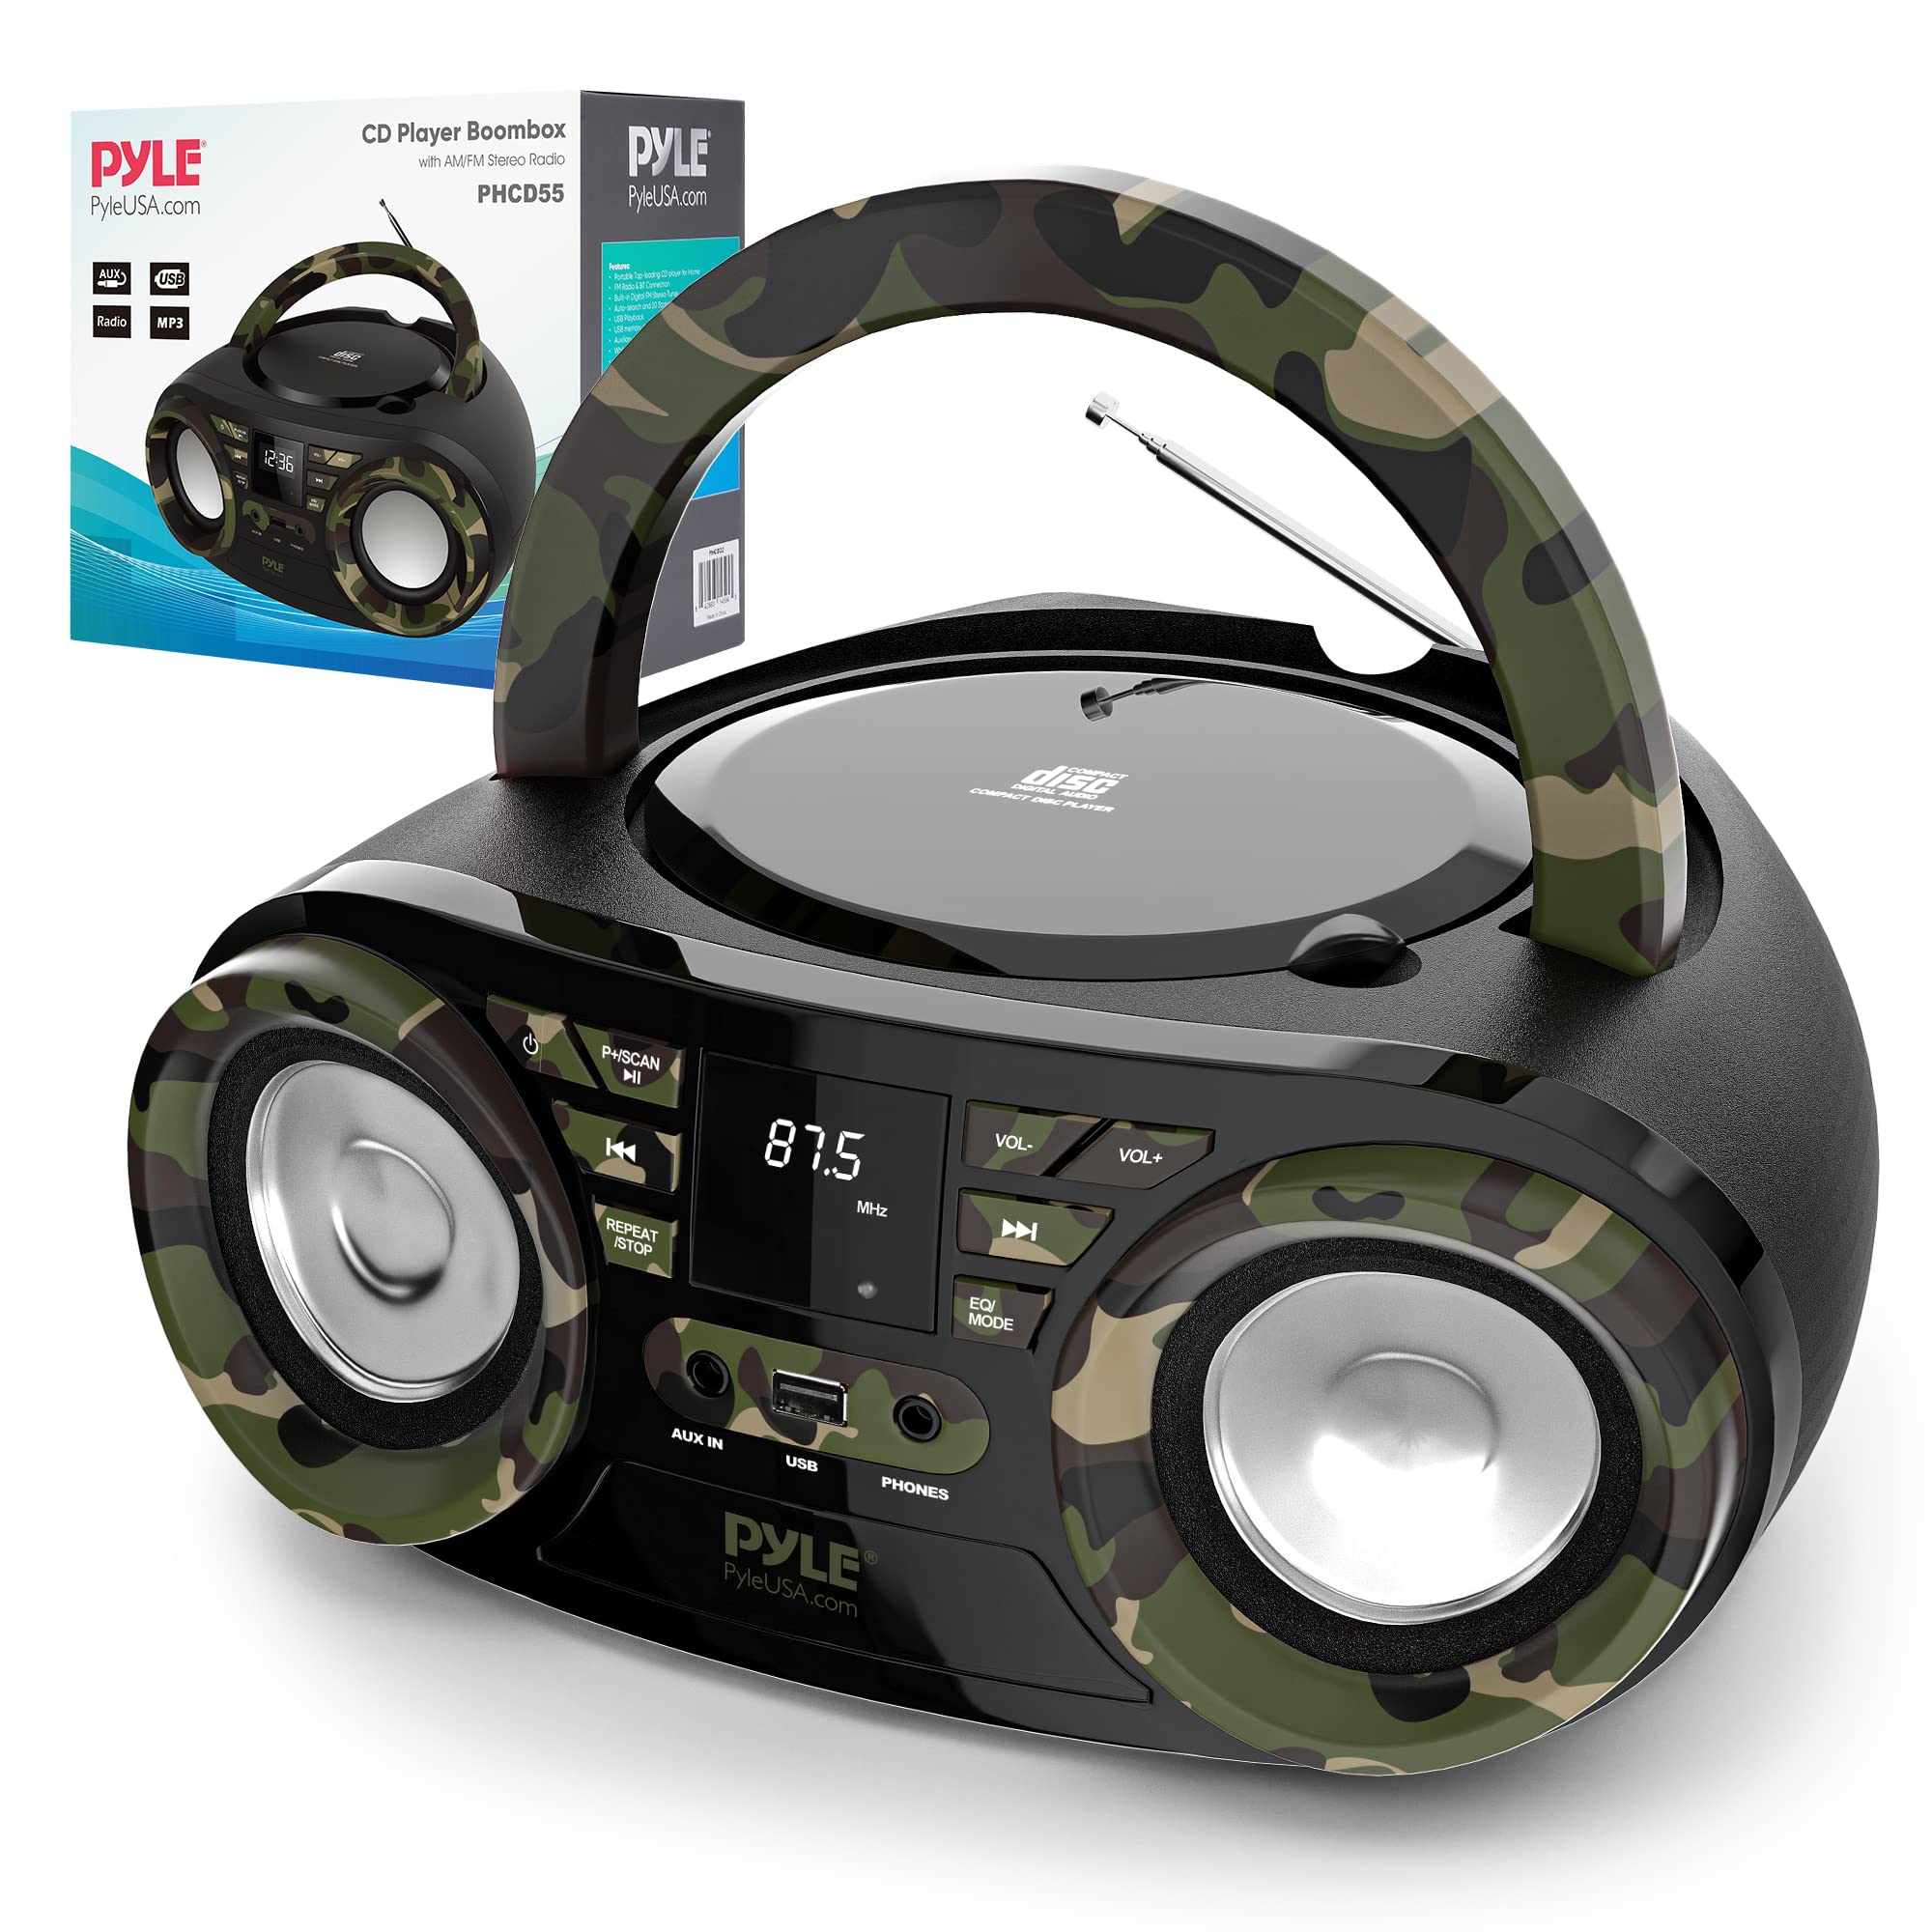 Mua Portable CD Player Bluetooth Boombox Speaker - AM/FM Stereo Radio &  Audio Sound, Supports CD-R-RW/MP3/WMA, USB, AUX, Headphone, LED Display,  AC/Battery Powered, Camouflage - Pyle PHCD59 trên Amazon Mỹ chính hãng